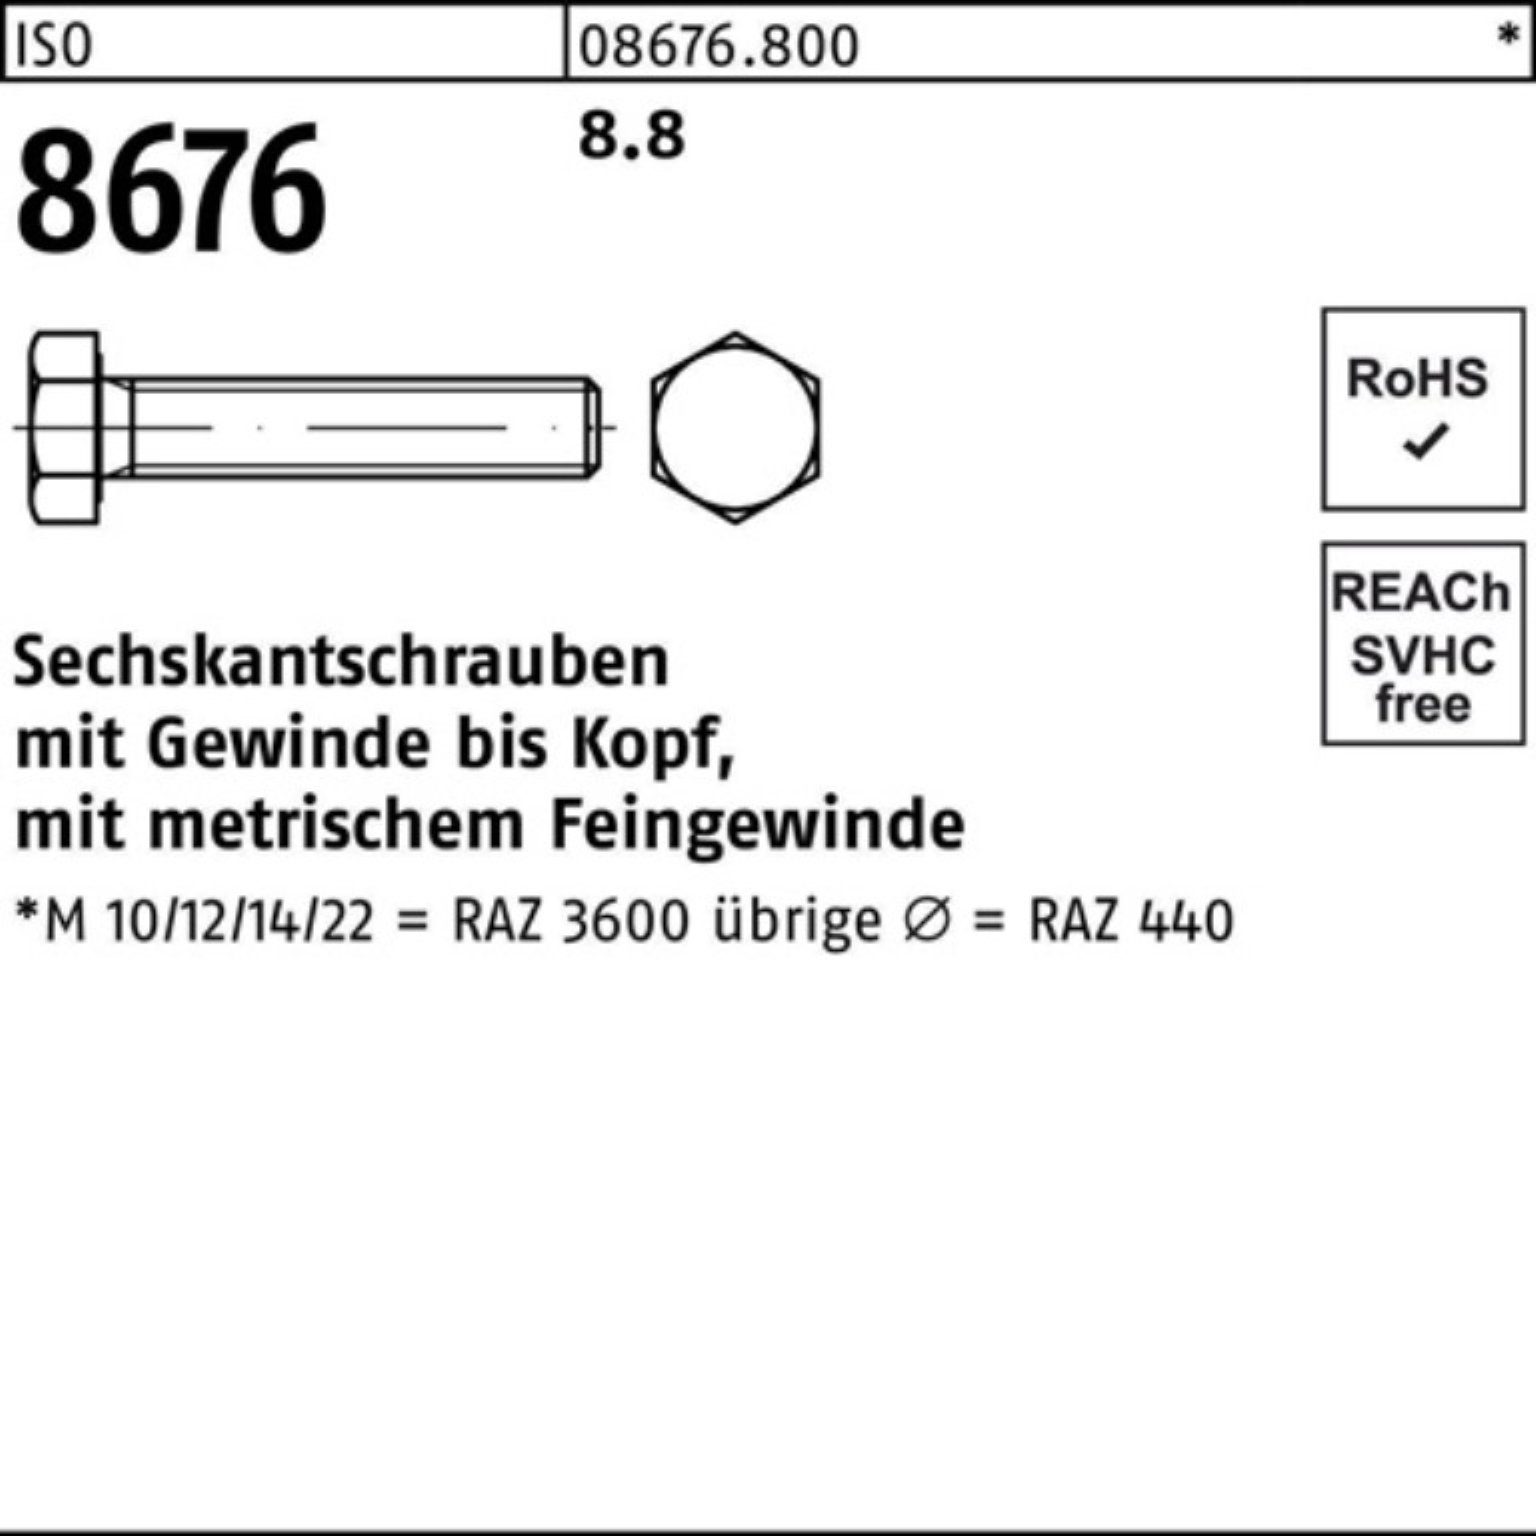 100 Reyher Pack 8.8 Stück Sechskantschraube 8 100er M8x1x Sechskantschraube 70 8676 VG ISO ISO